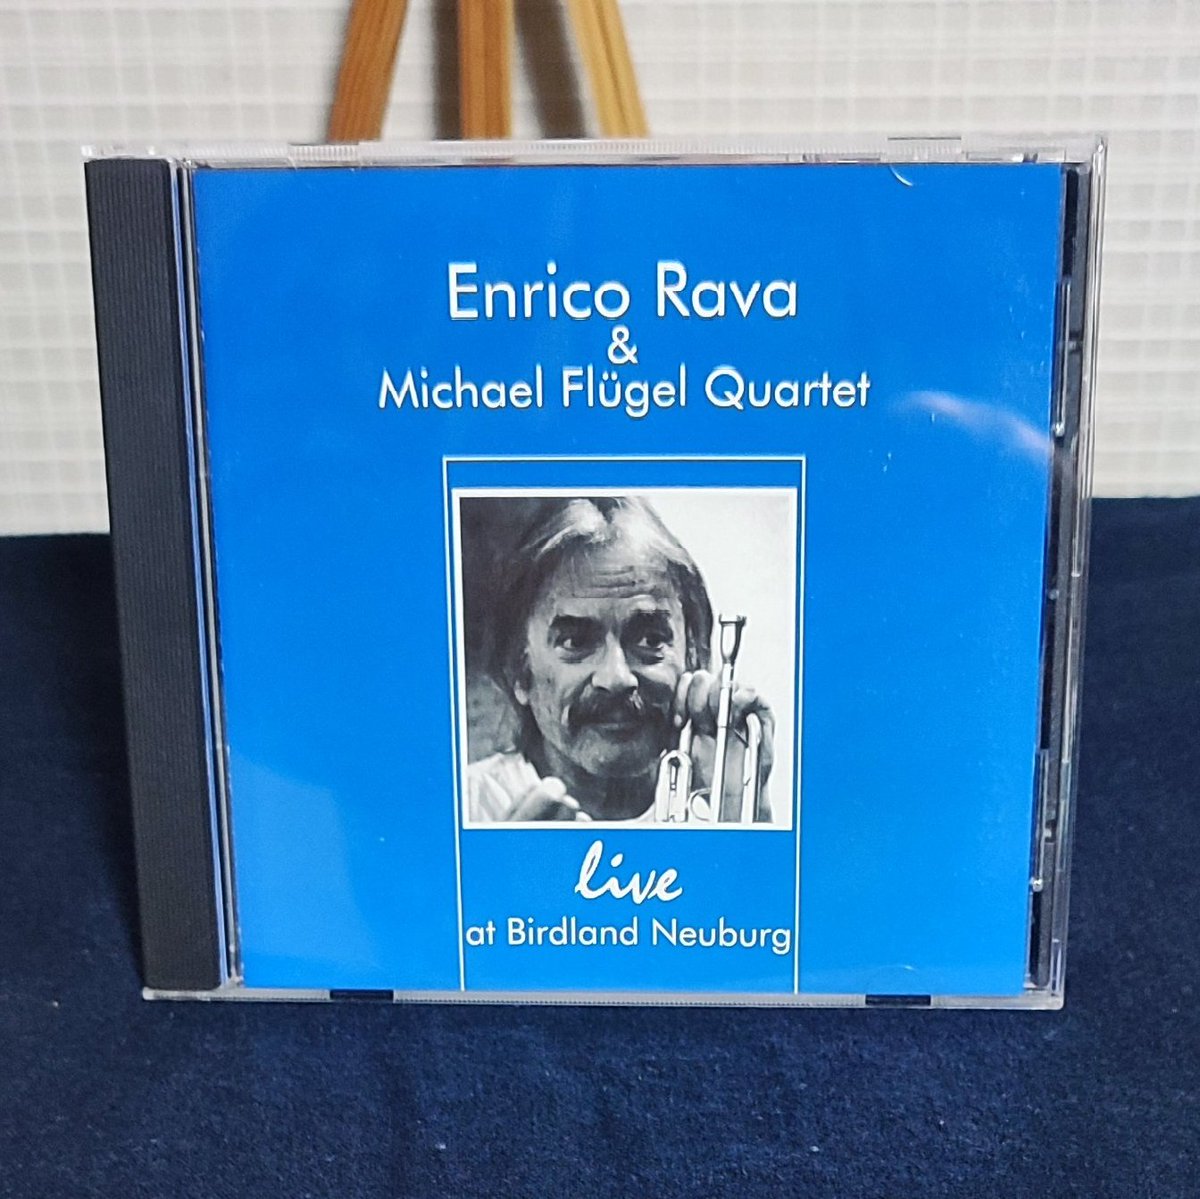 Enrico Rava & Michael Flügel Quartet - Live at Birdland Neuburg
#nowspinning #compactdisc